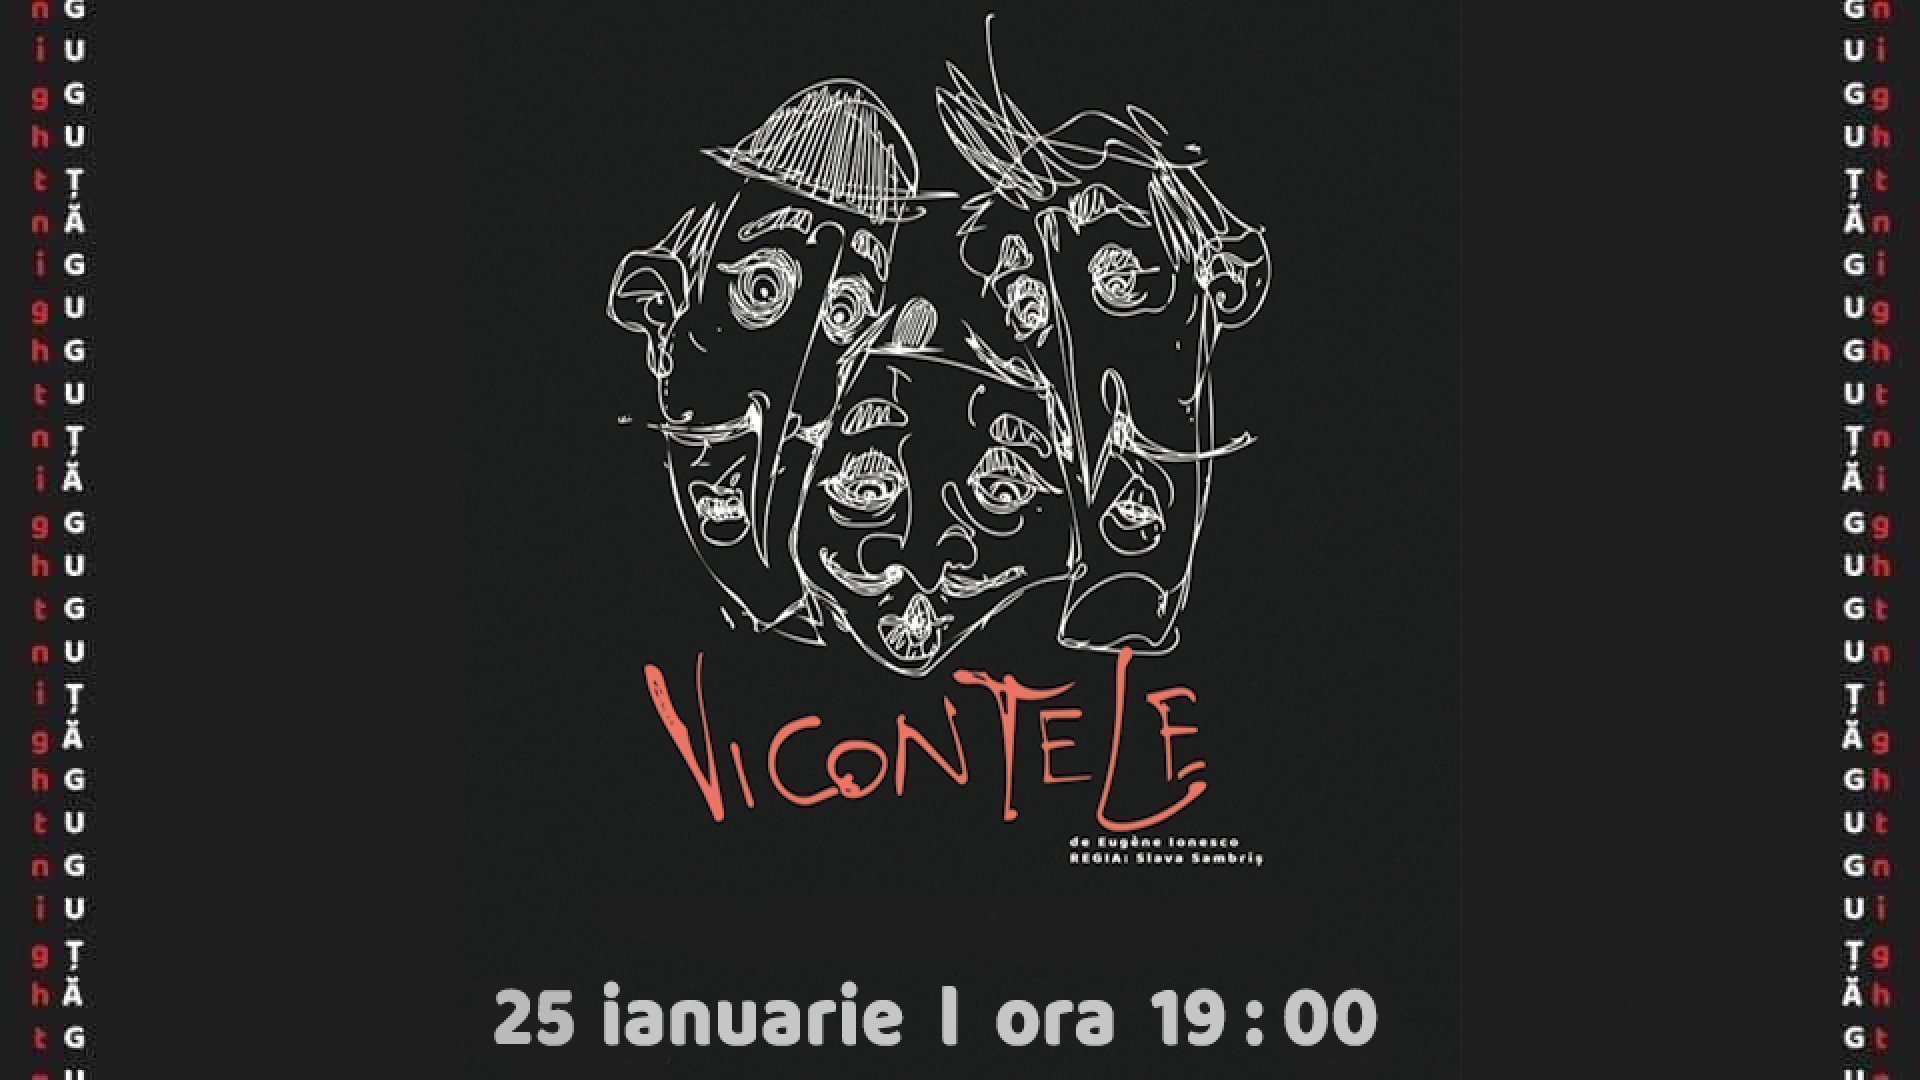 Vicontele de Eugene Ionesco februarie 2020